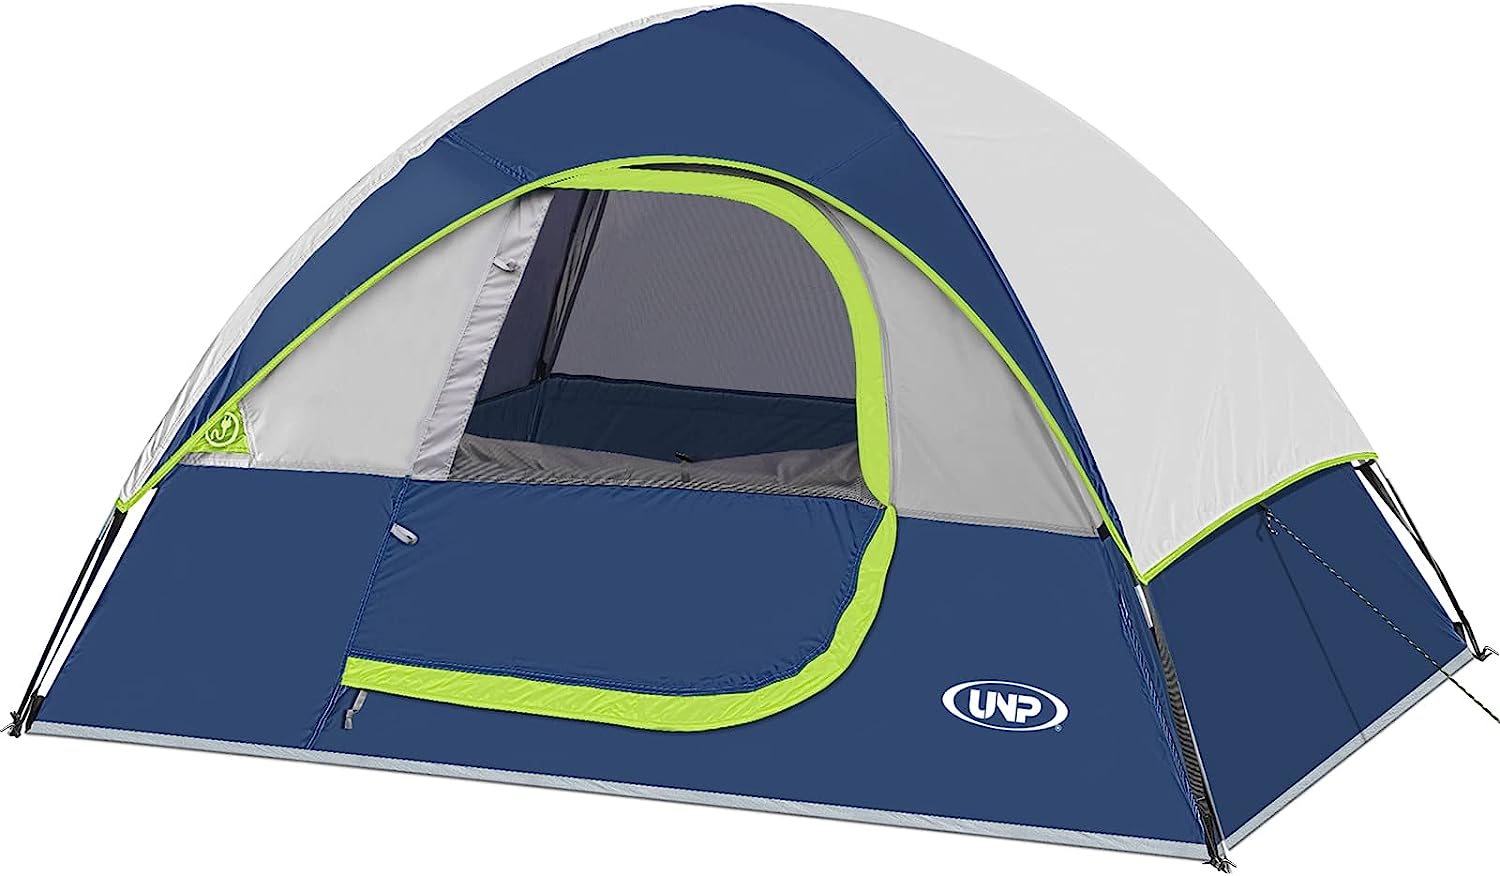 Unp Dome Tent